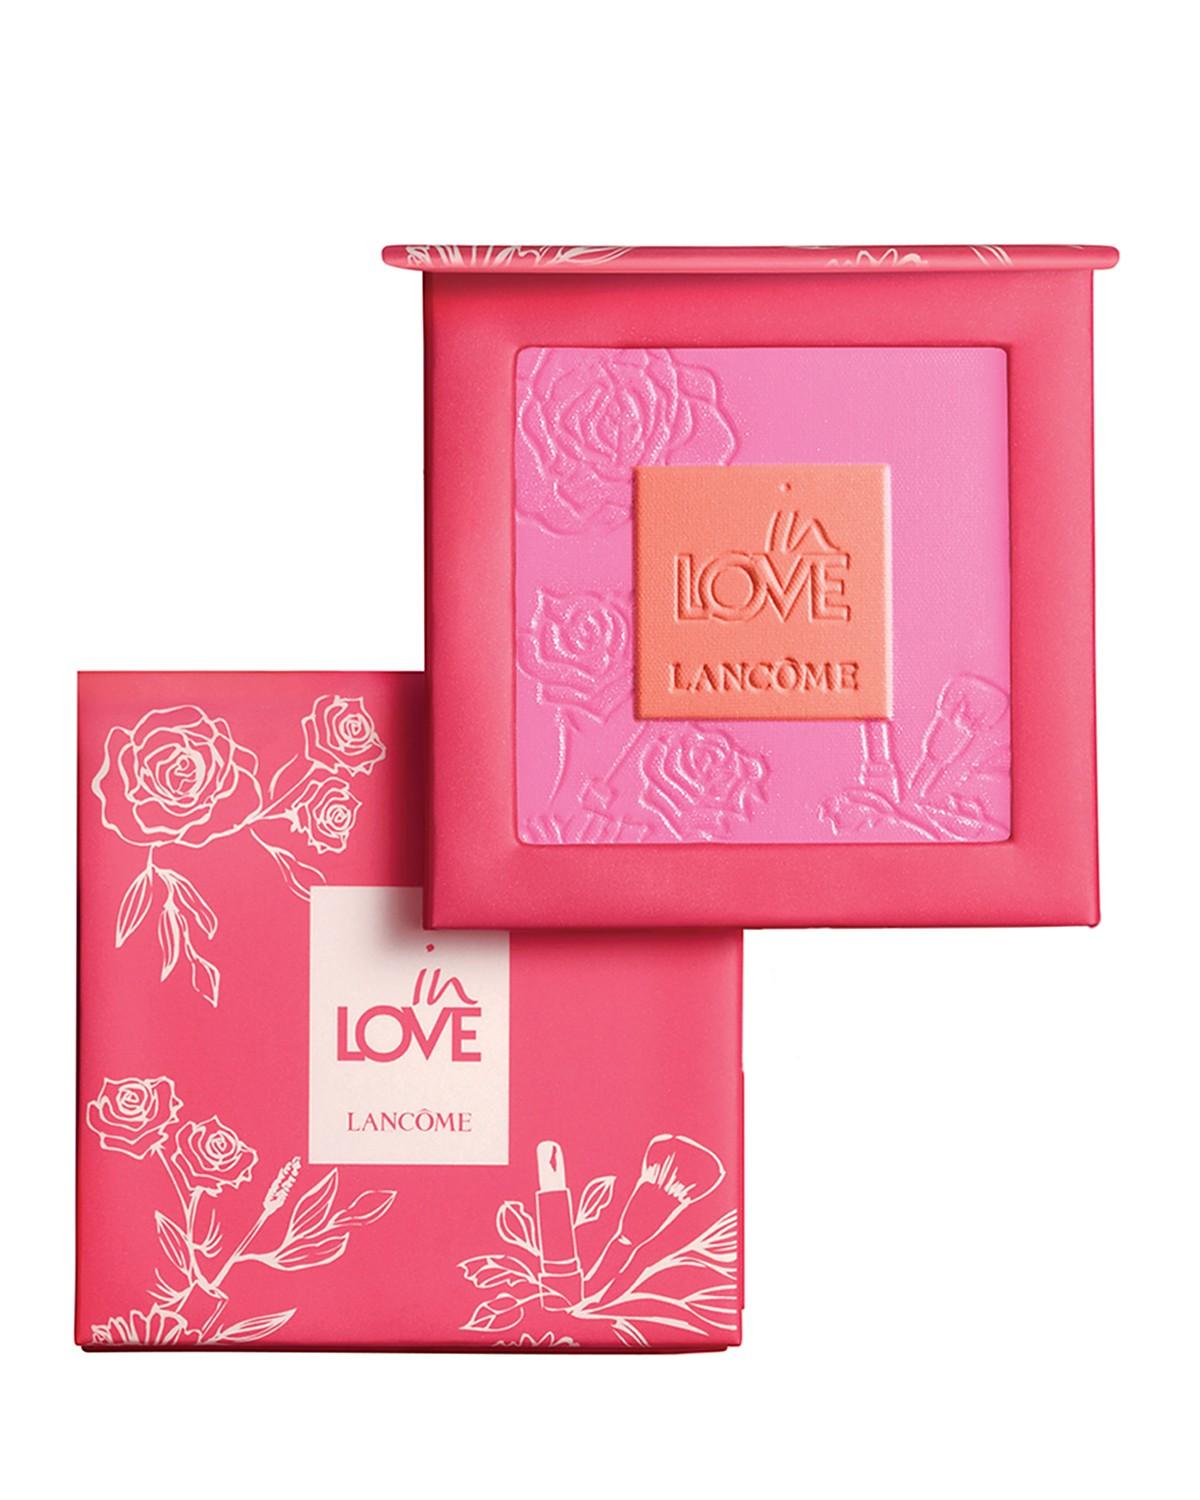 Lancôme blush In Love - €47.30